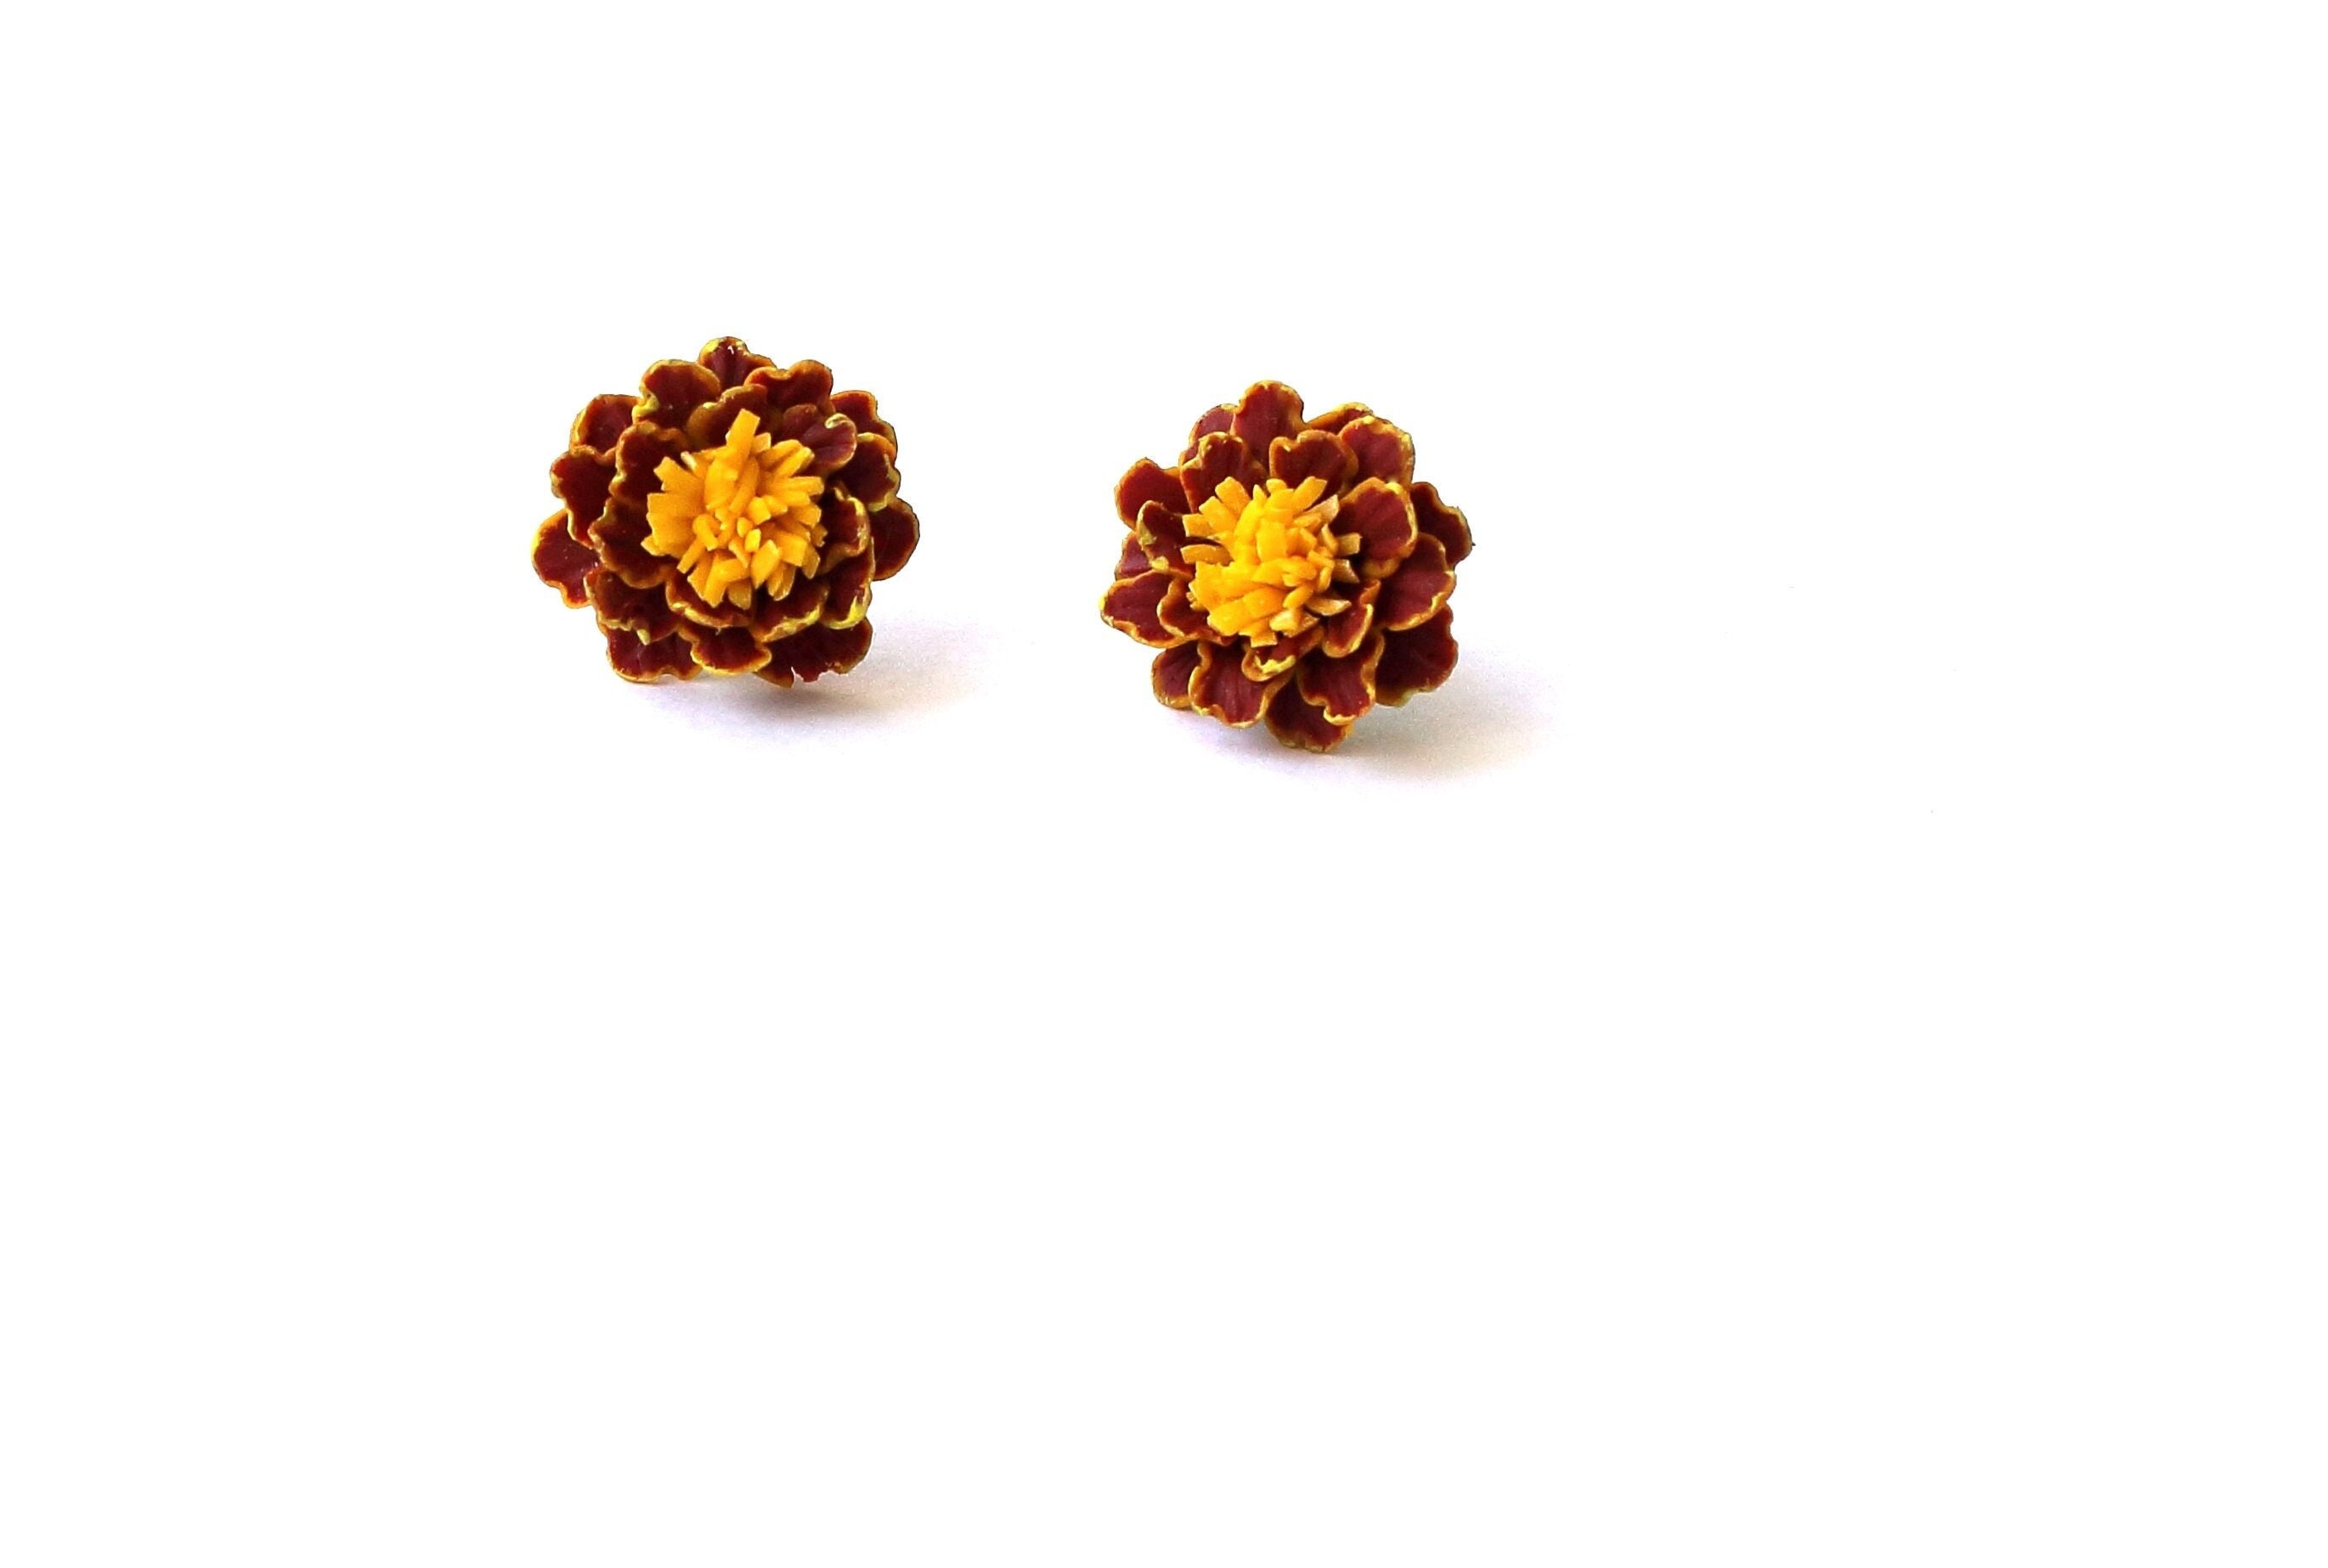 Cempasúchil and Marigold Flower Silicone Mold